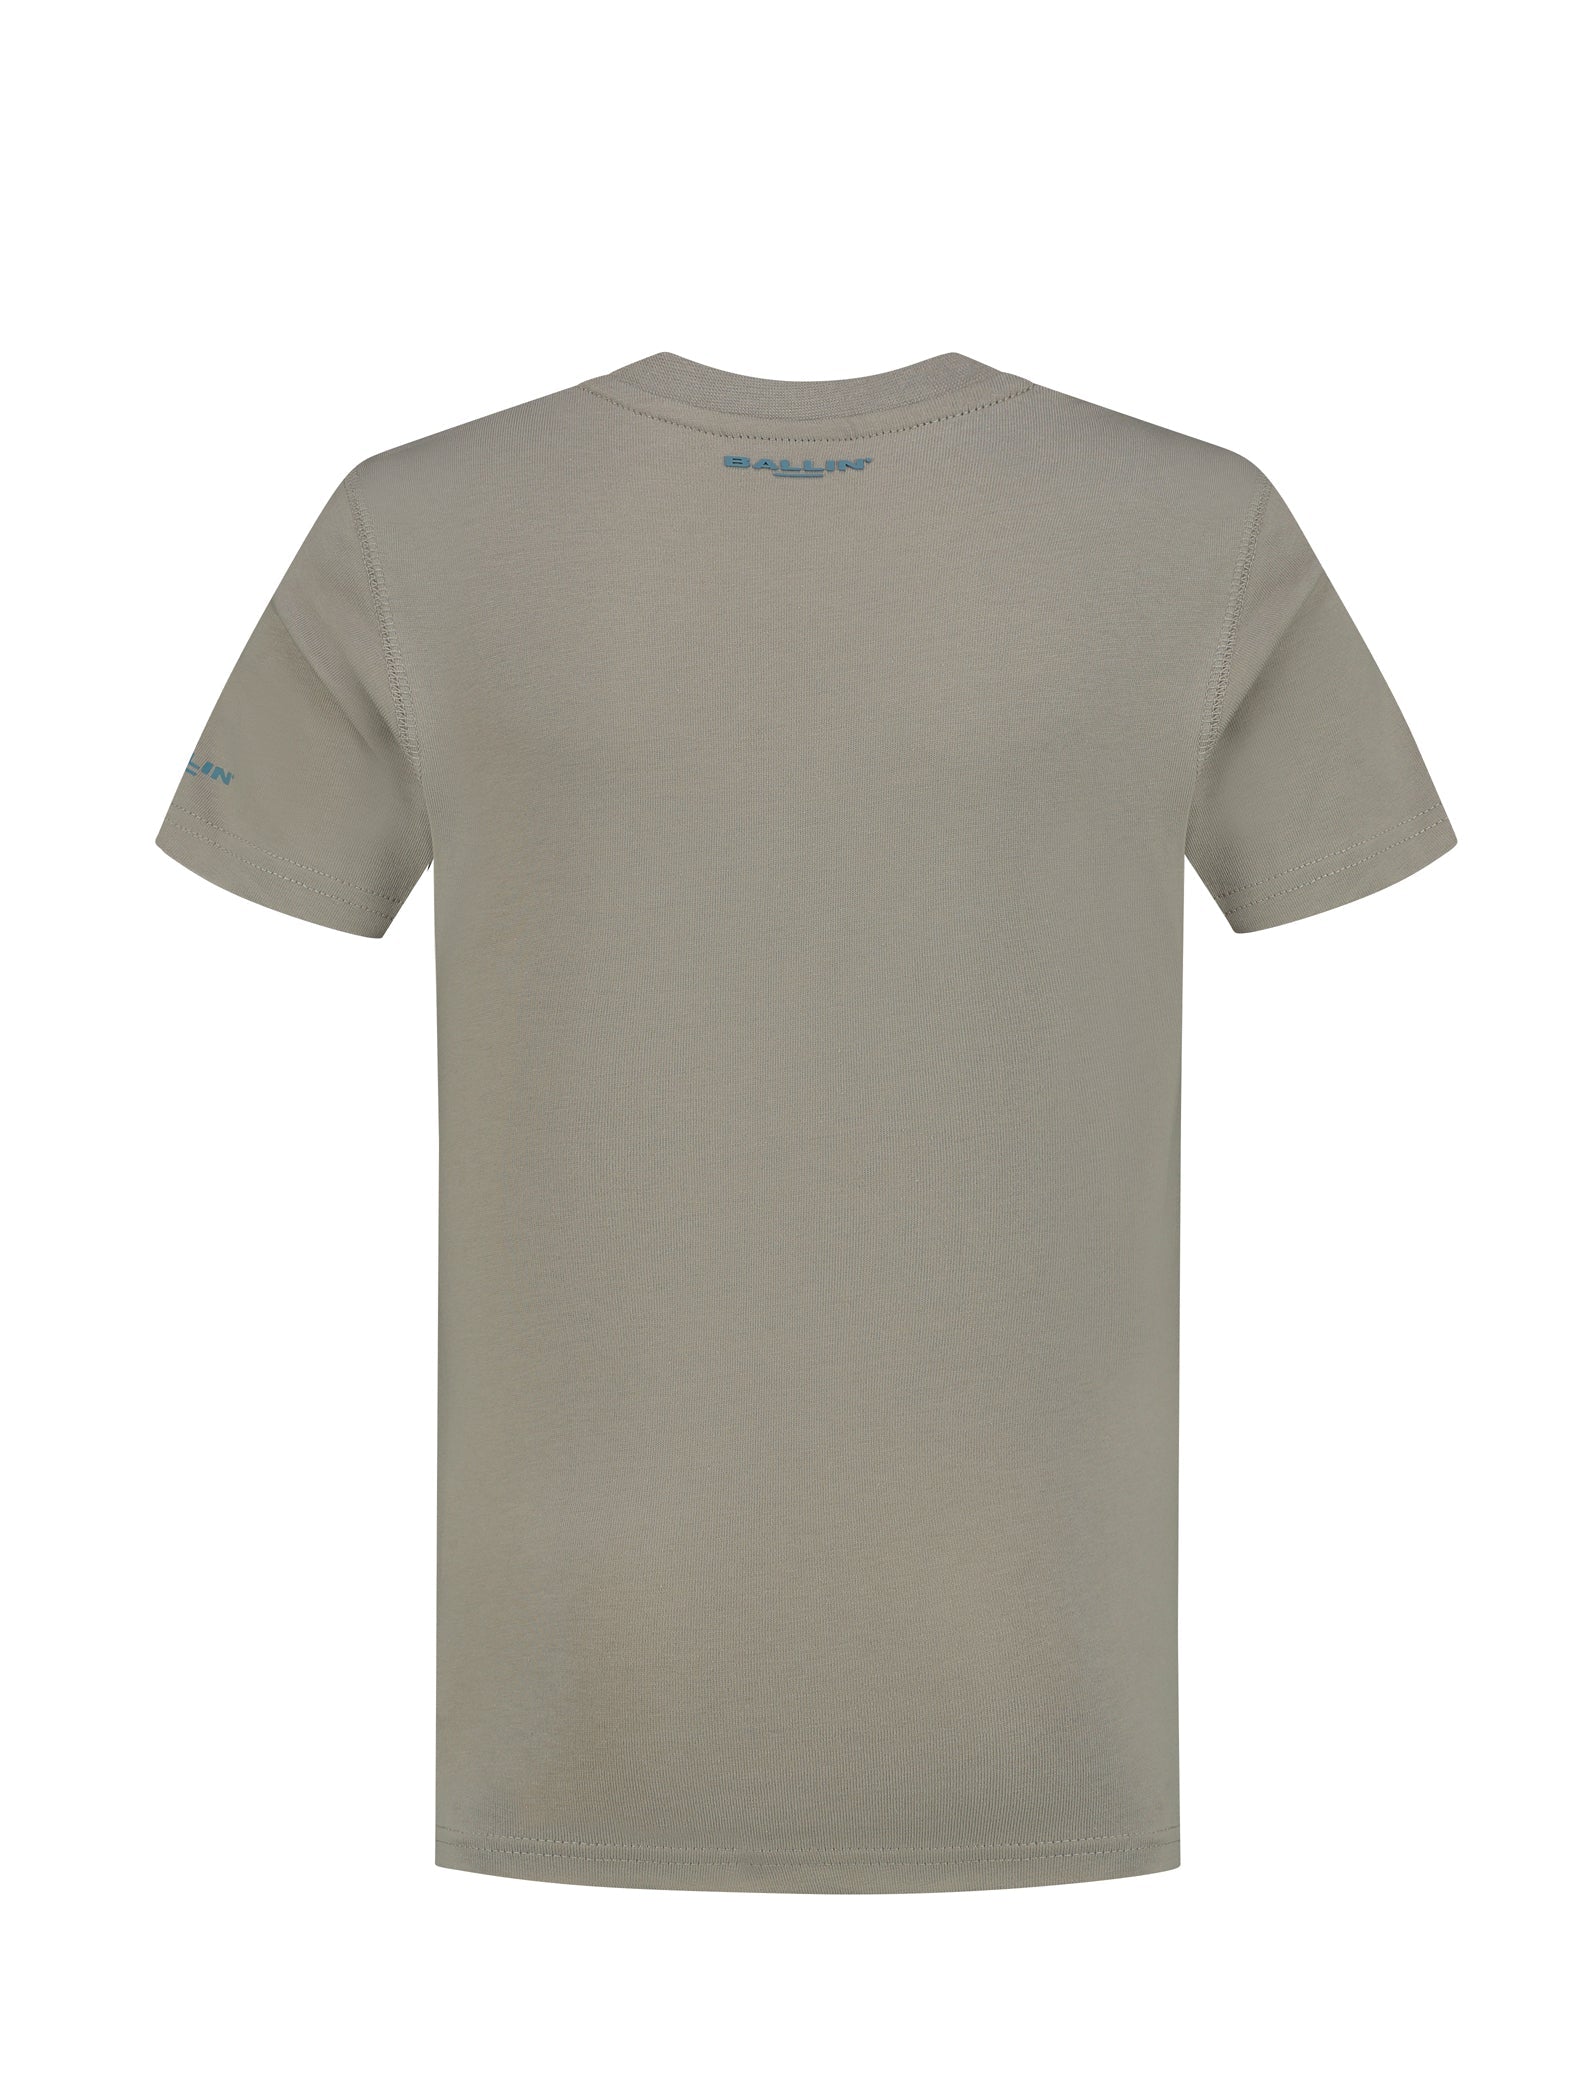 Unisexs T-shirt with chest print van Ballin Amsterdam in de kleur Taupe in maat 176.